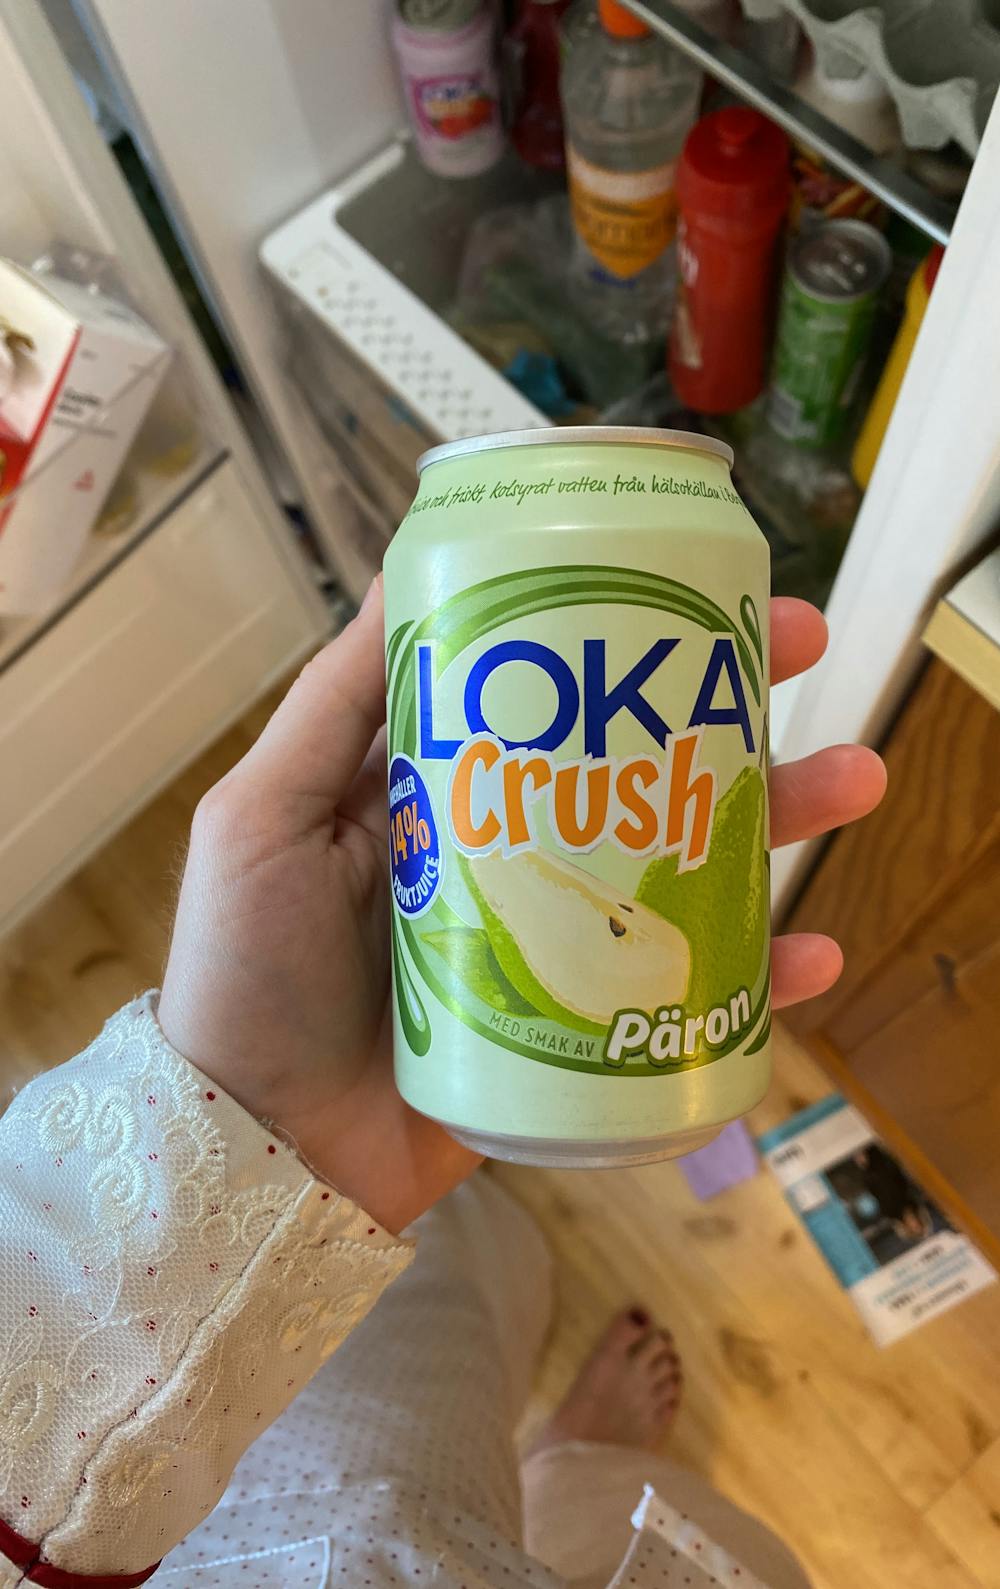 Päron, Loka crush